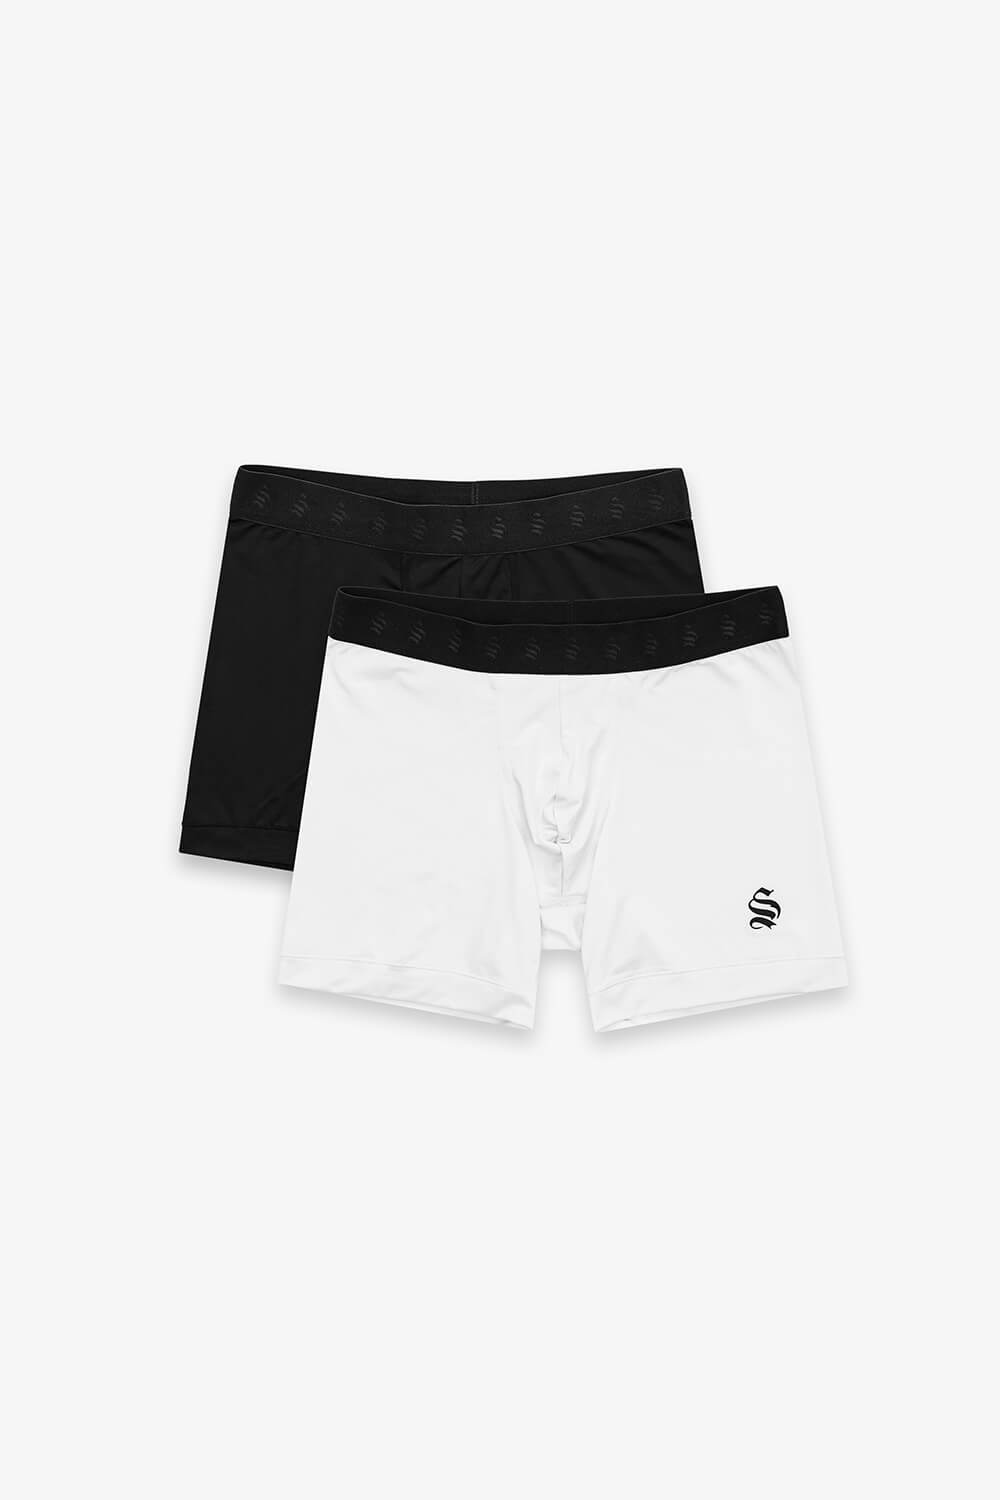 Emblem Boxer Shorts - Combo (2 Pack)